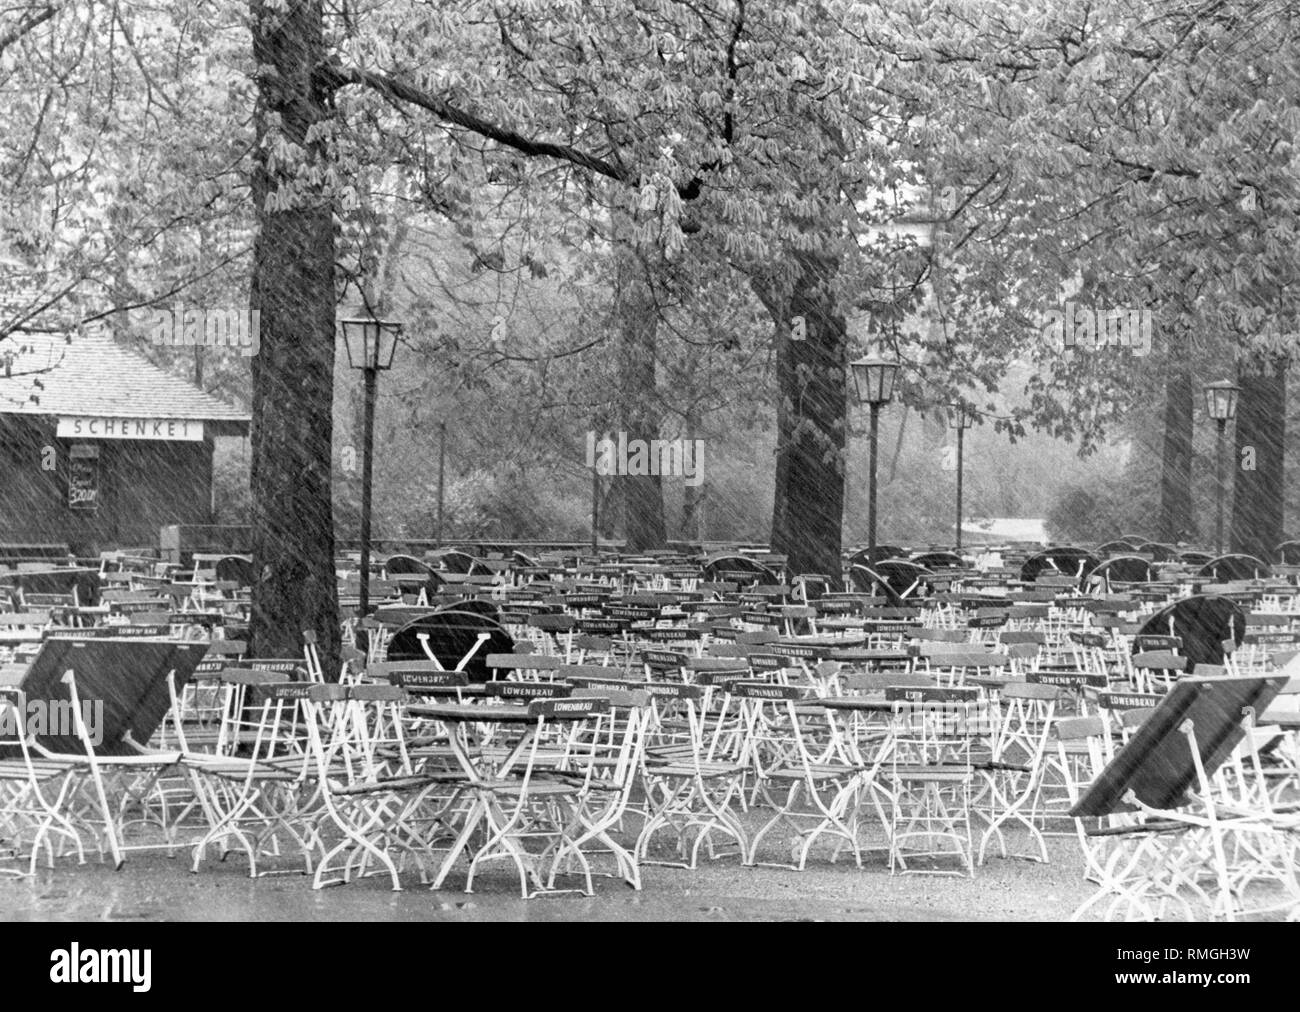 The beer garden at the Chinese Tower in the Englischer Garten in Munich was emptied by rain. Stock Photo